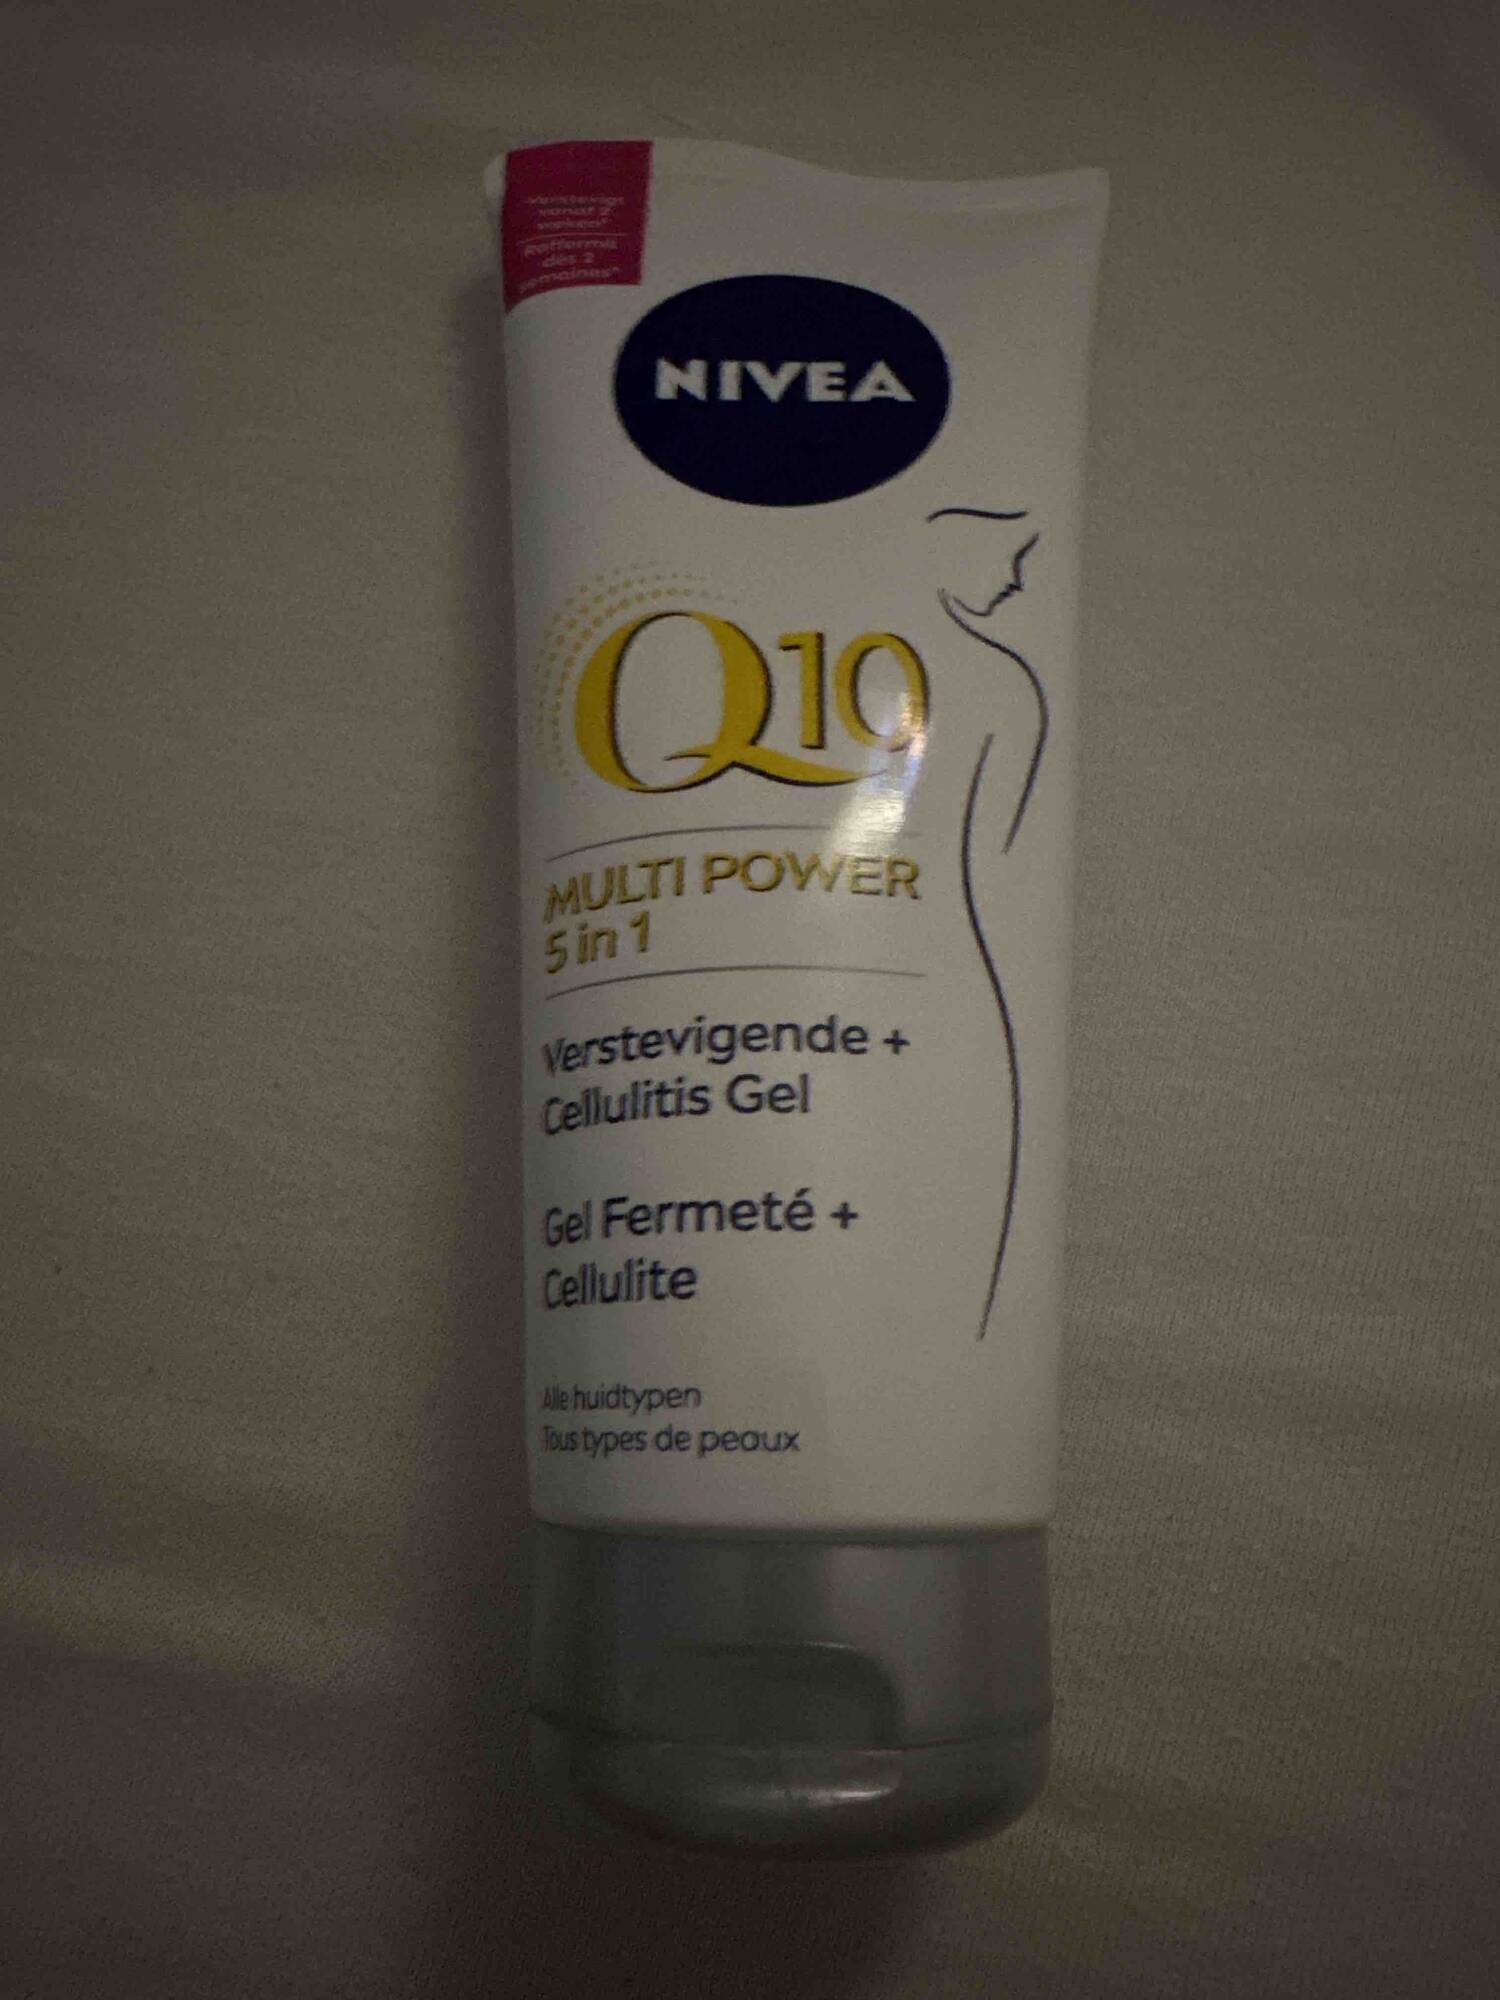 NIVEA - Q10 multi power 5 in 1 - Gel crème fermeté + cellulite